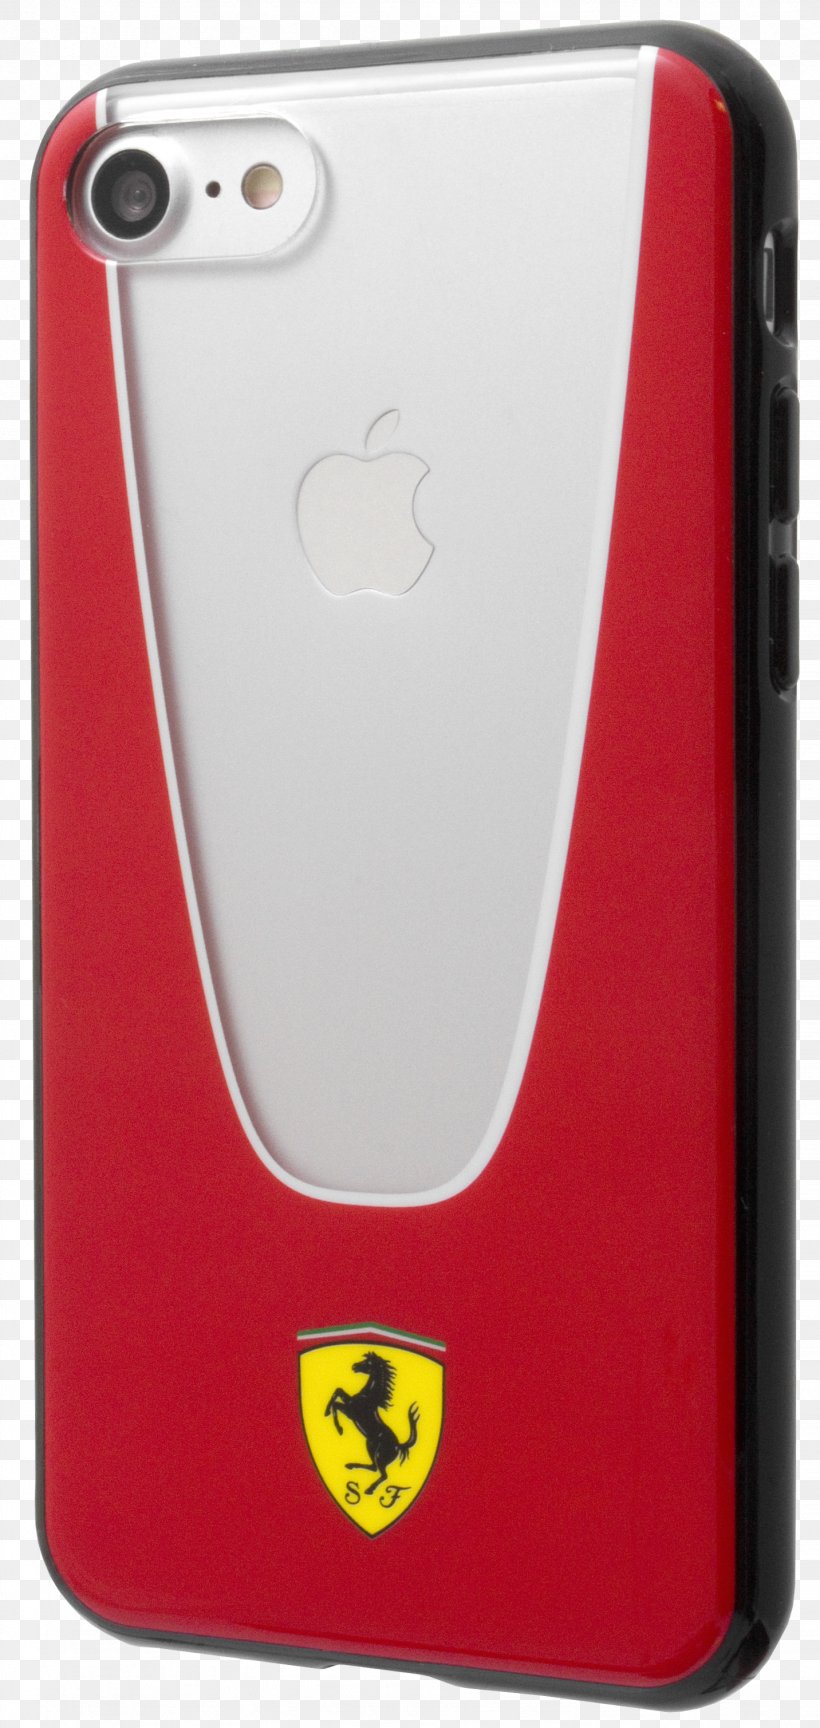 Apple Iphone 8 Apple Iphone 7 Plus Ferrari S P A Iphone X Mini Png 1432x3018px Apple Iphone